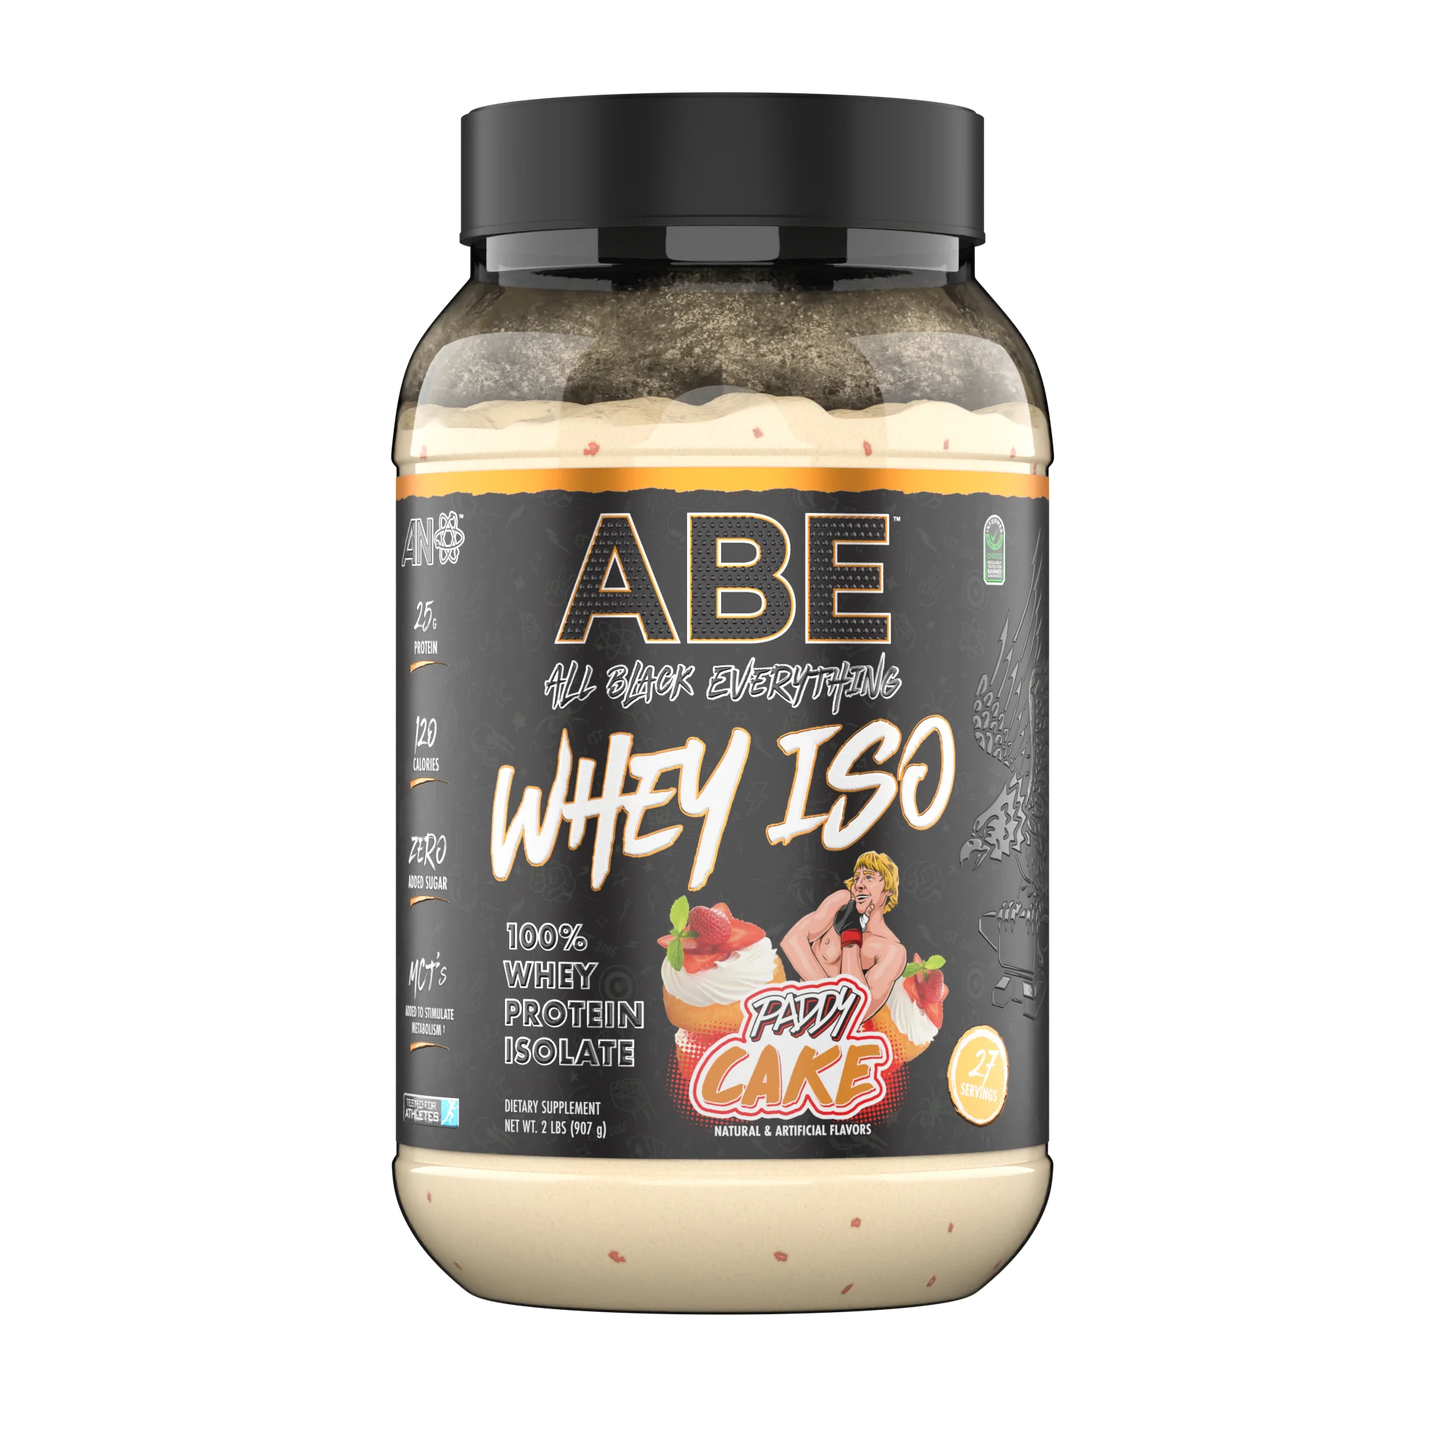 ABE Whey ISO Paddy Cake Powder 